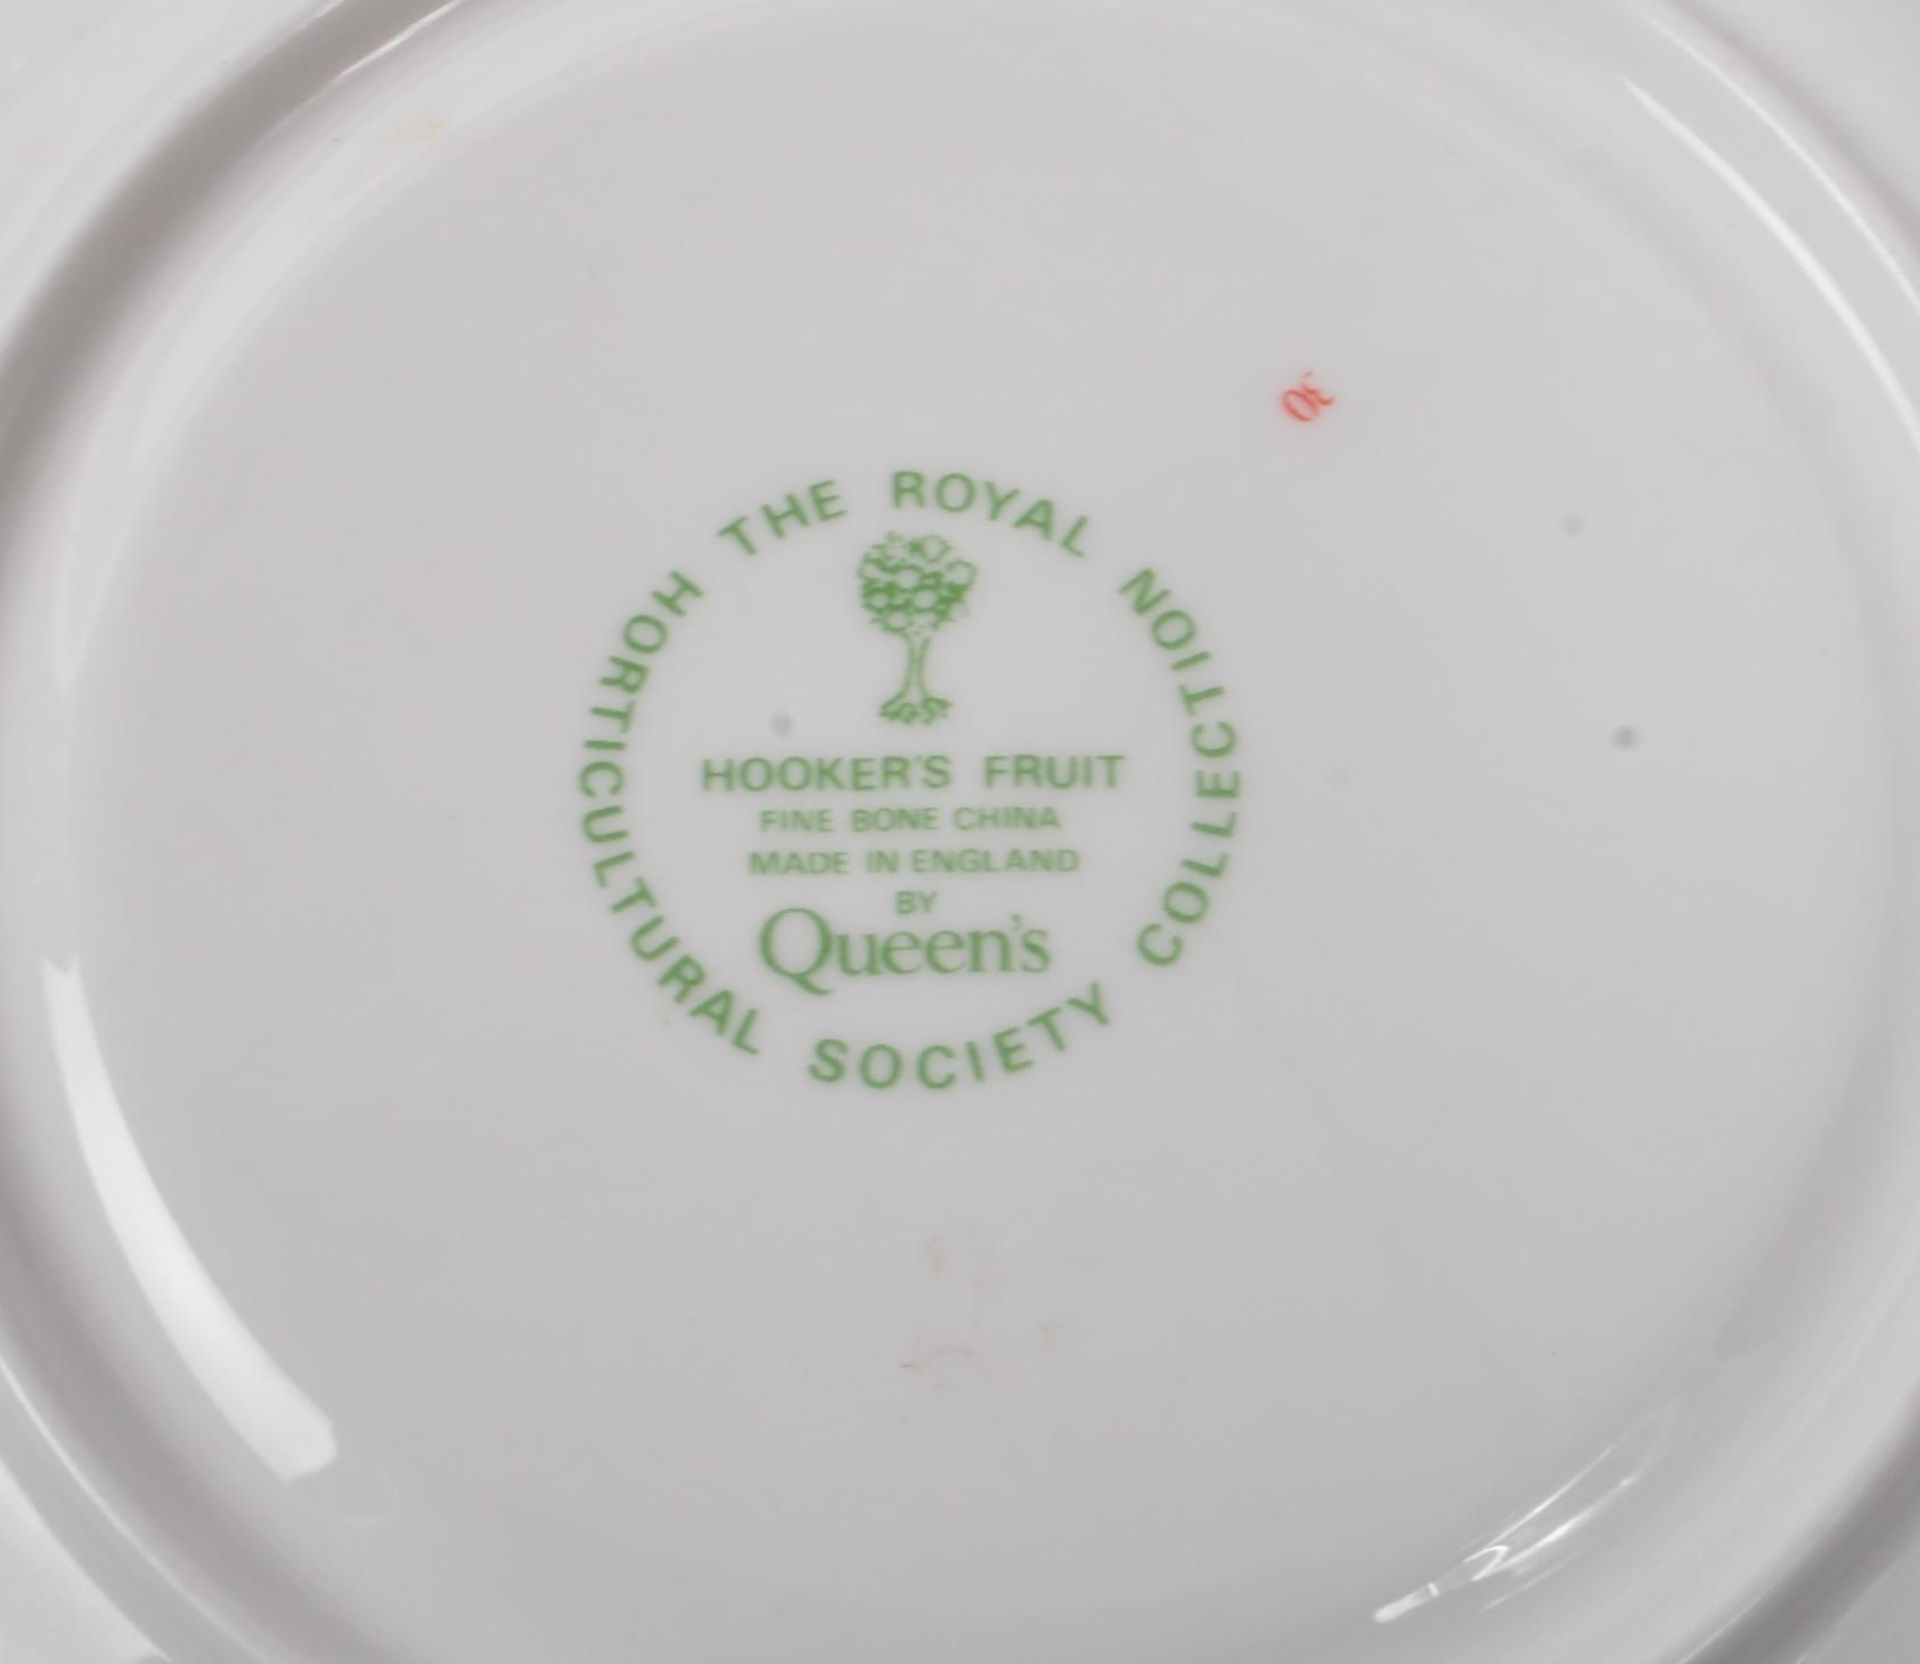 THE ROYAL HORTICULTURAL SOCIETY - HOOKER'S FRUIT PATTERN TEA SET - Image 7 of 7